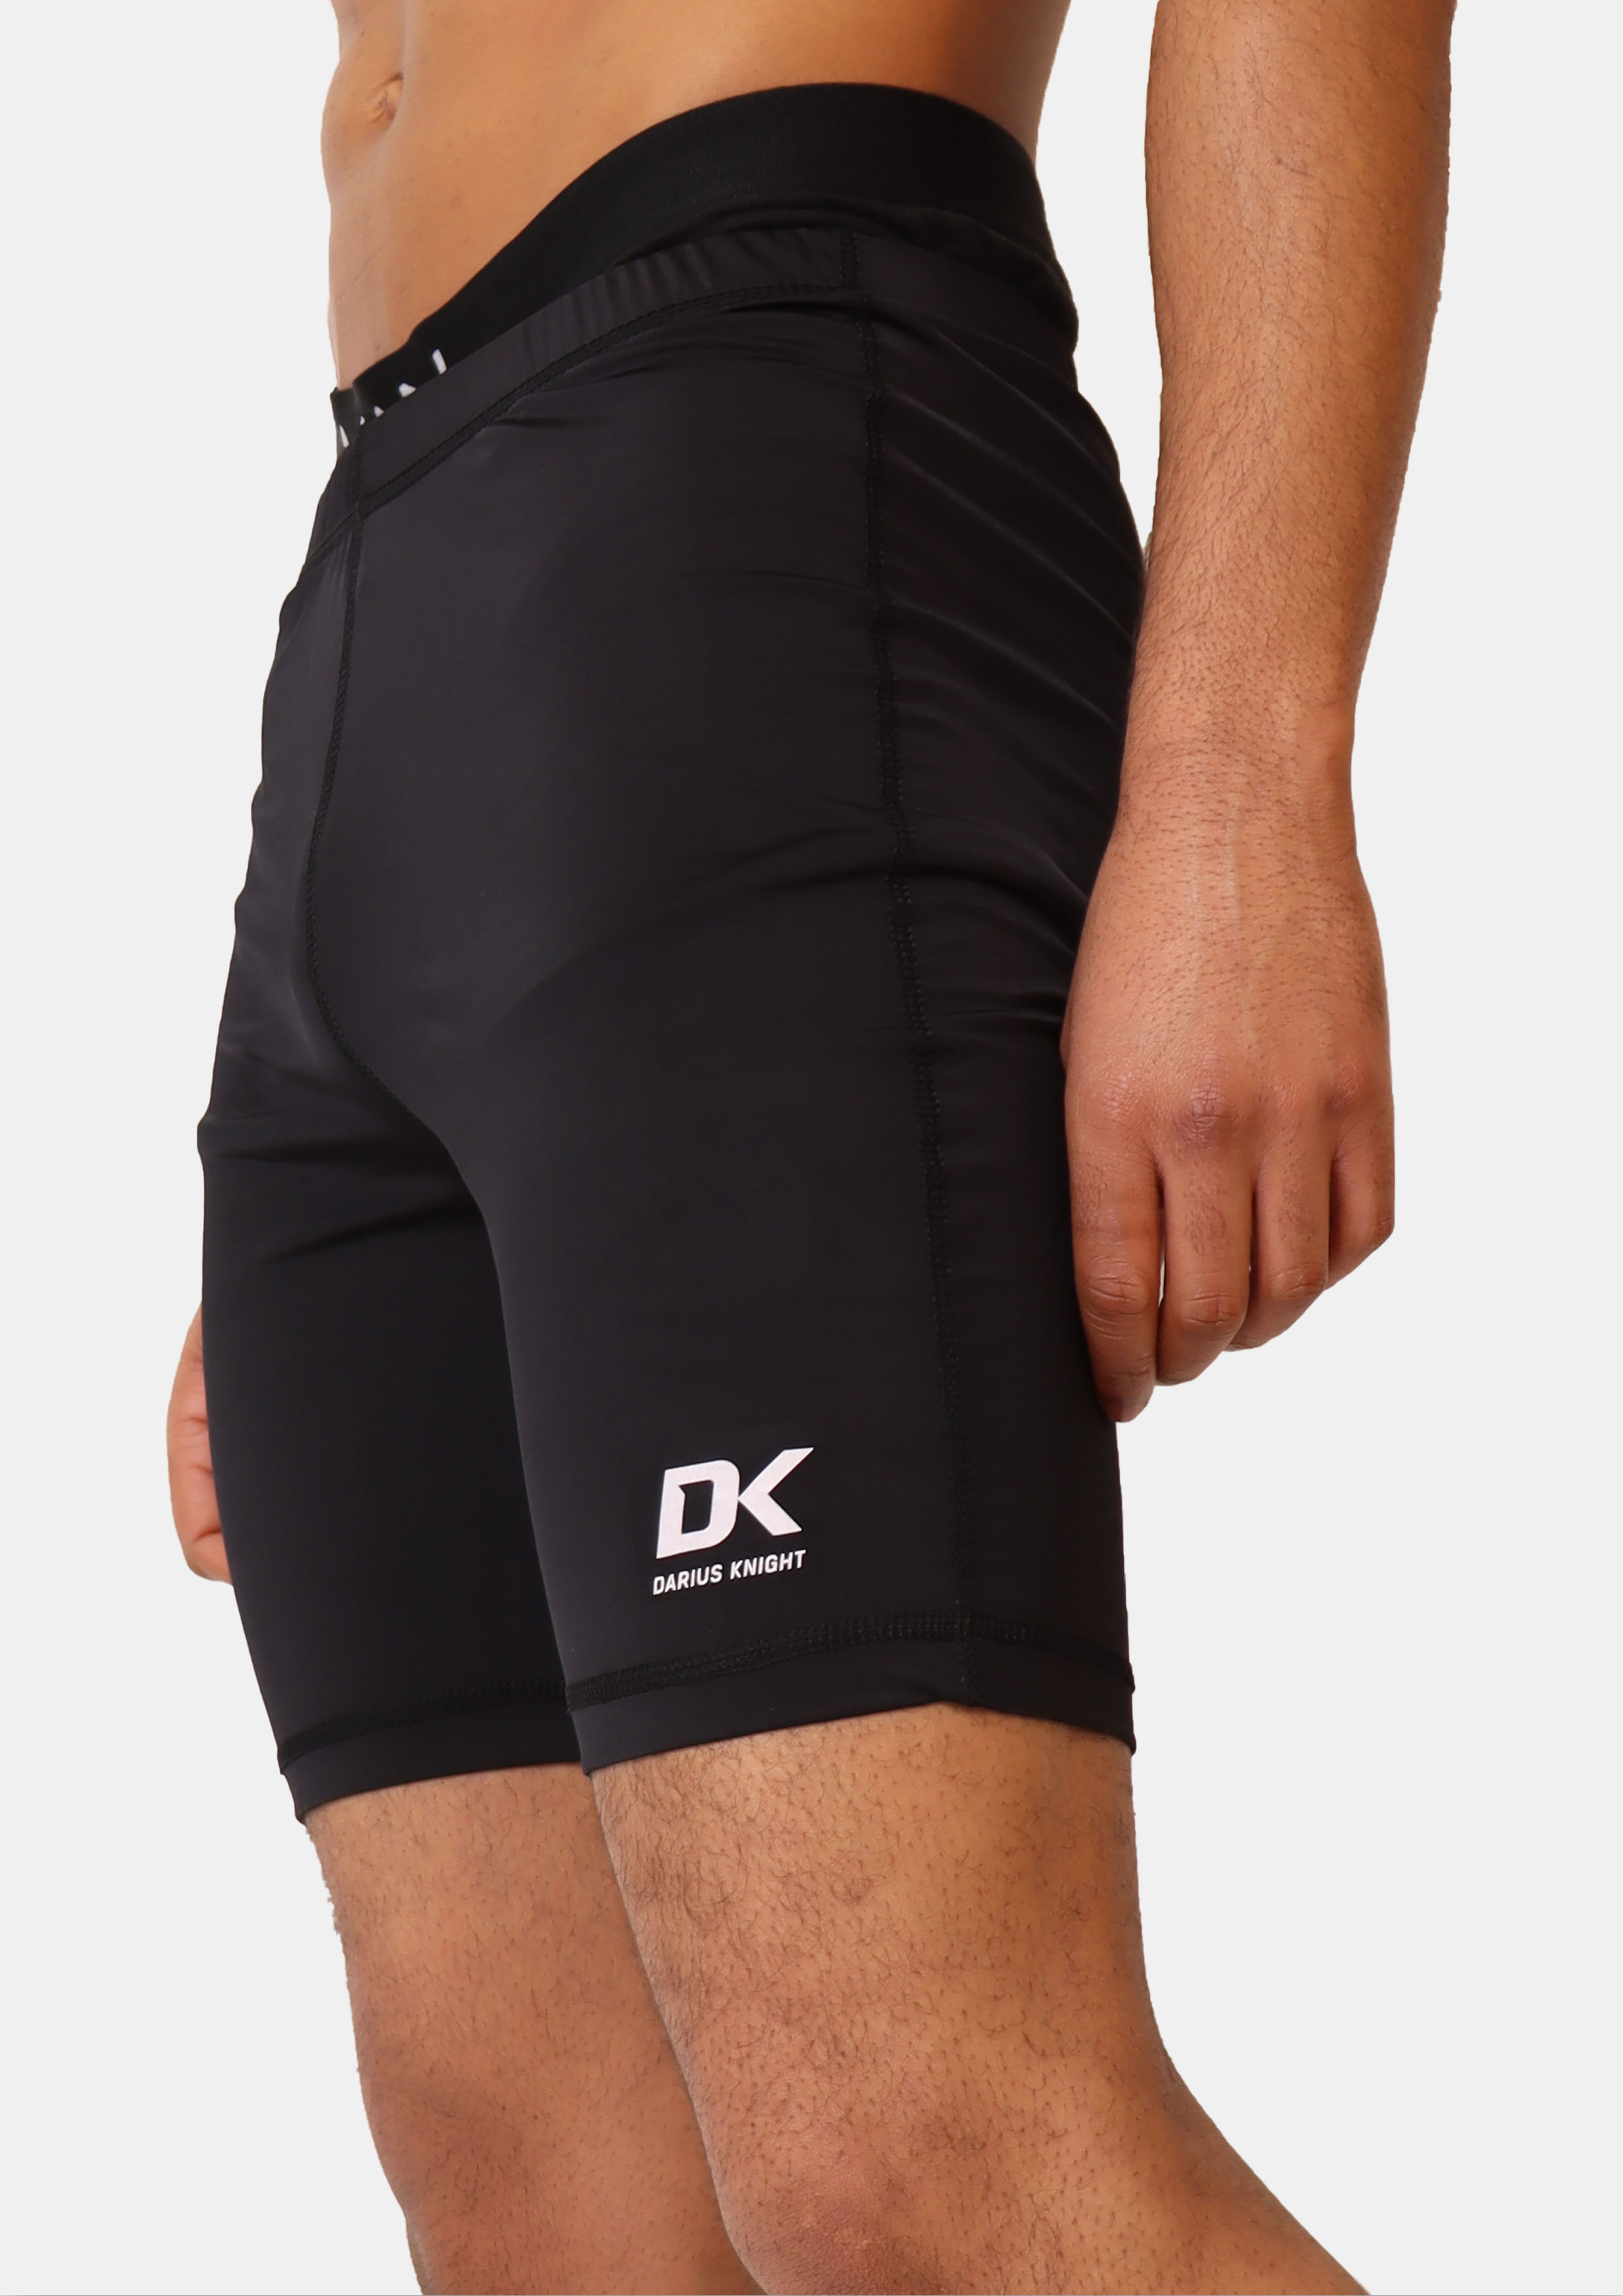 DK Compression Shorts - DK Sports